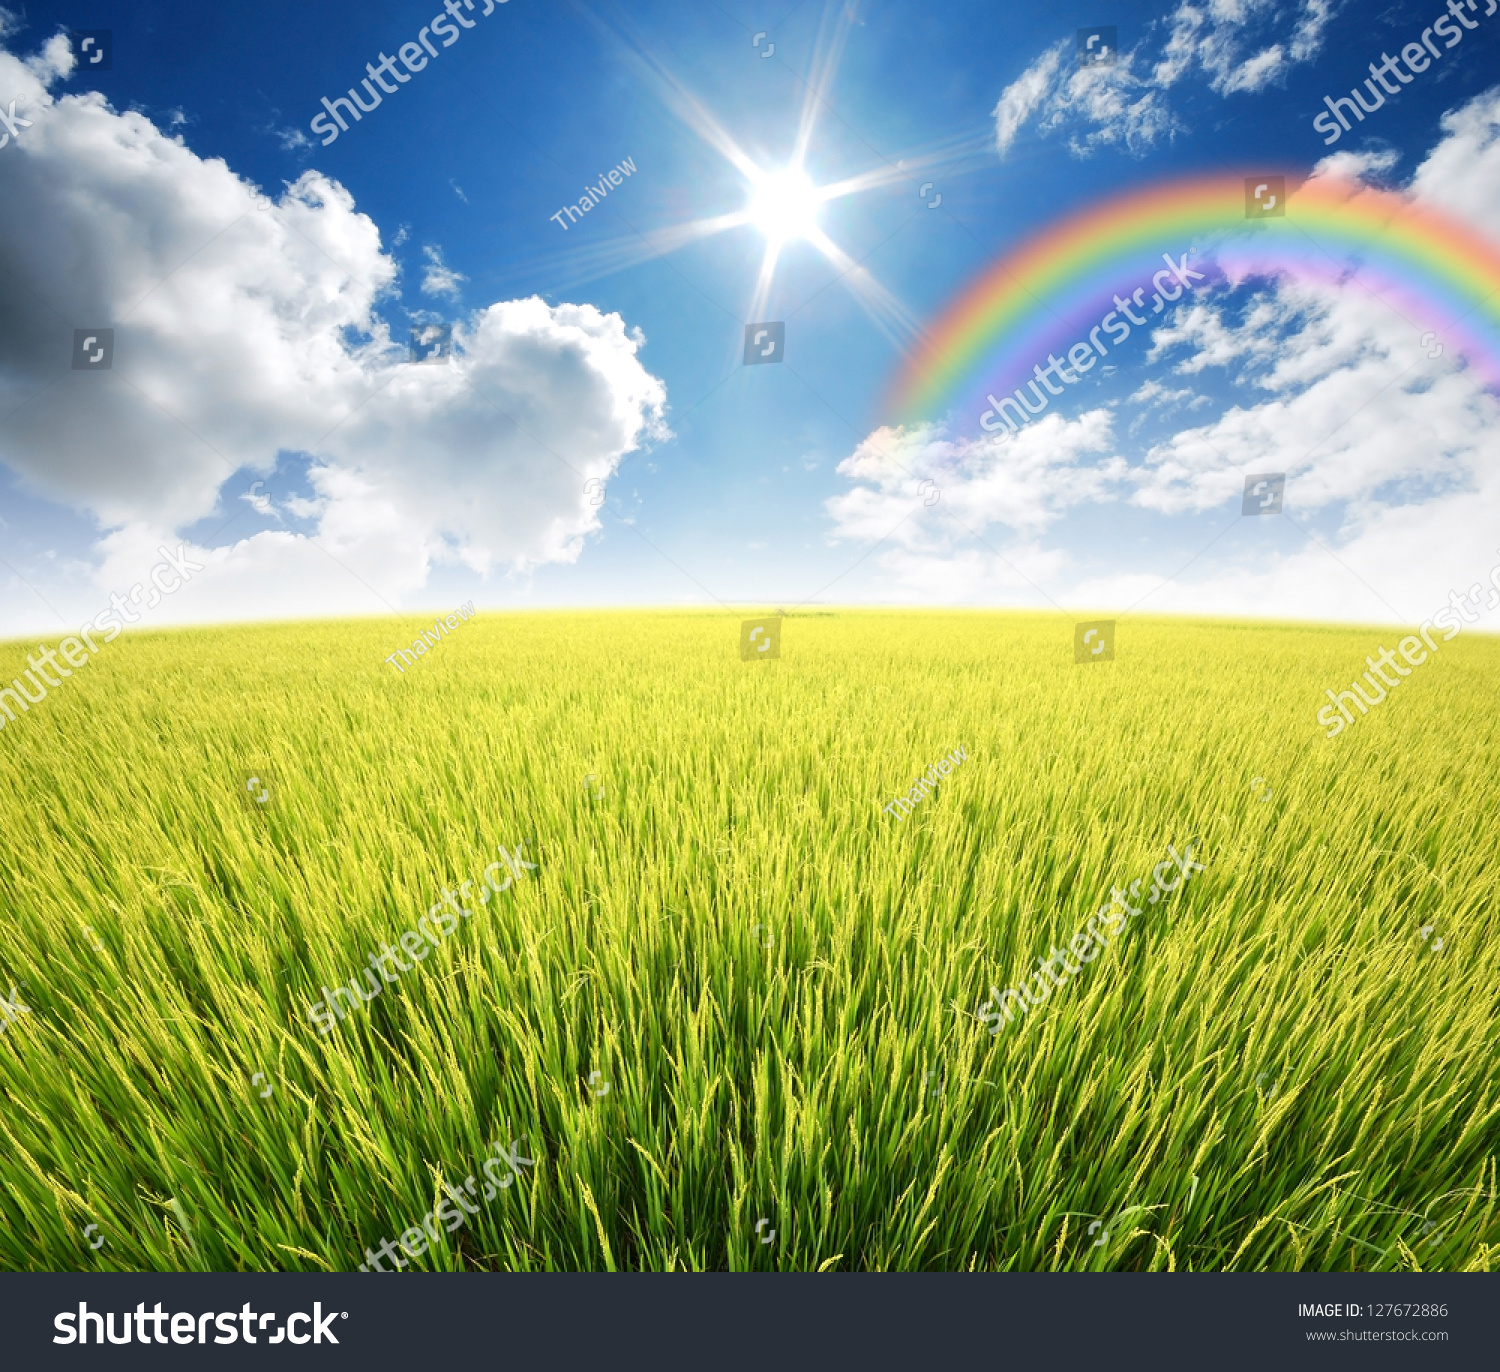 Green Grass Rice Field Blue Sky Stock Photo (Royalty Free) 127672886 ...